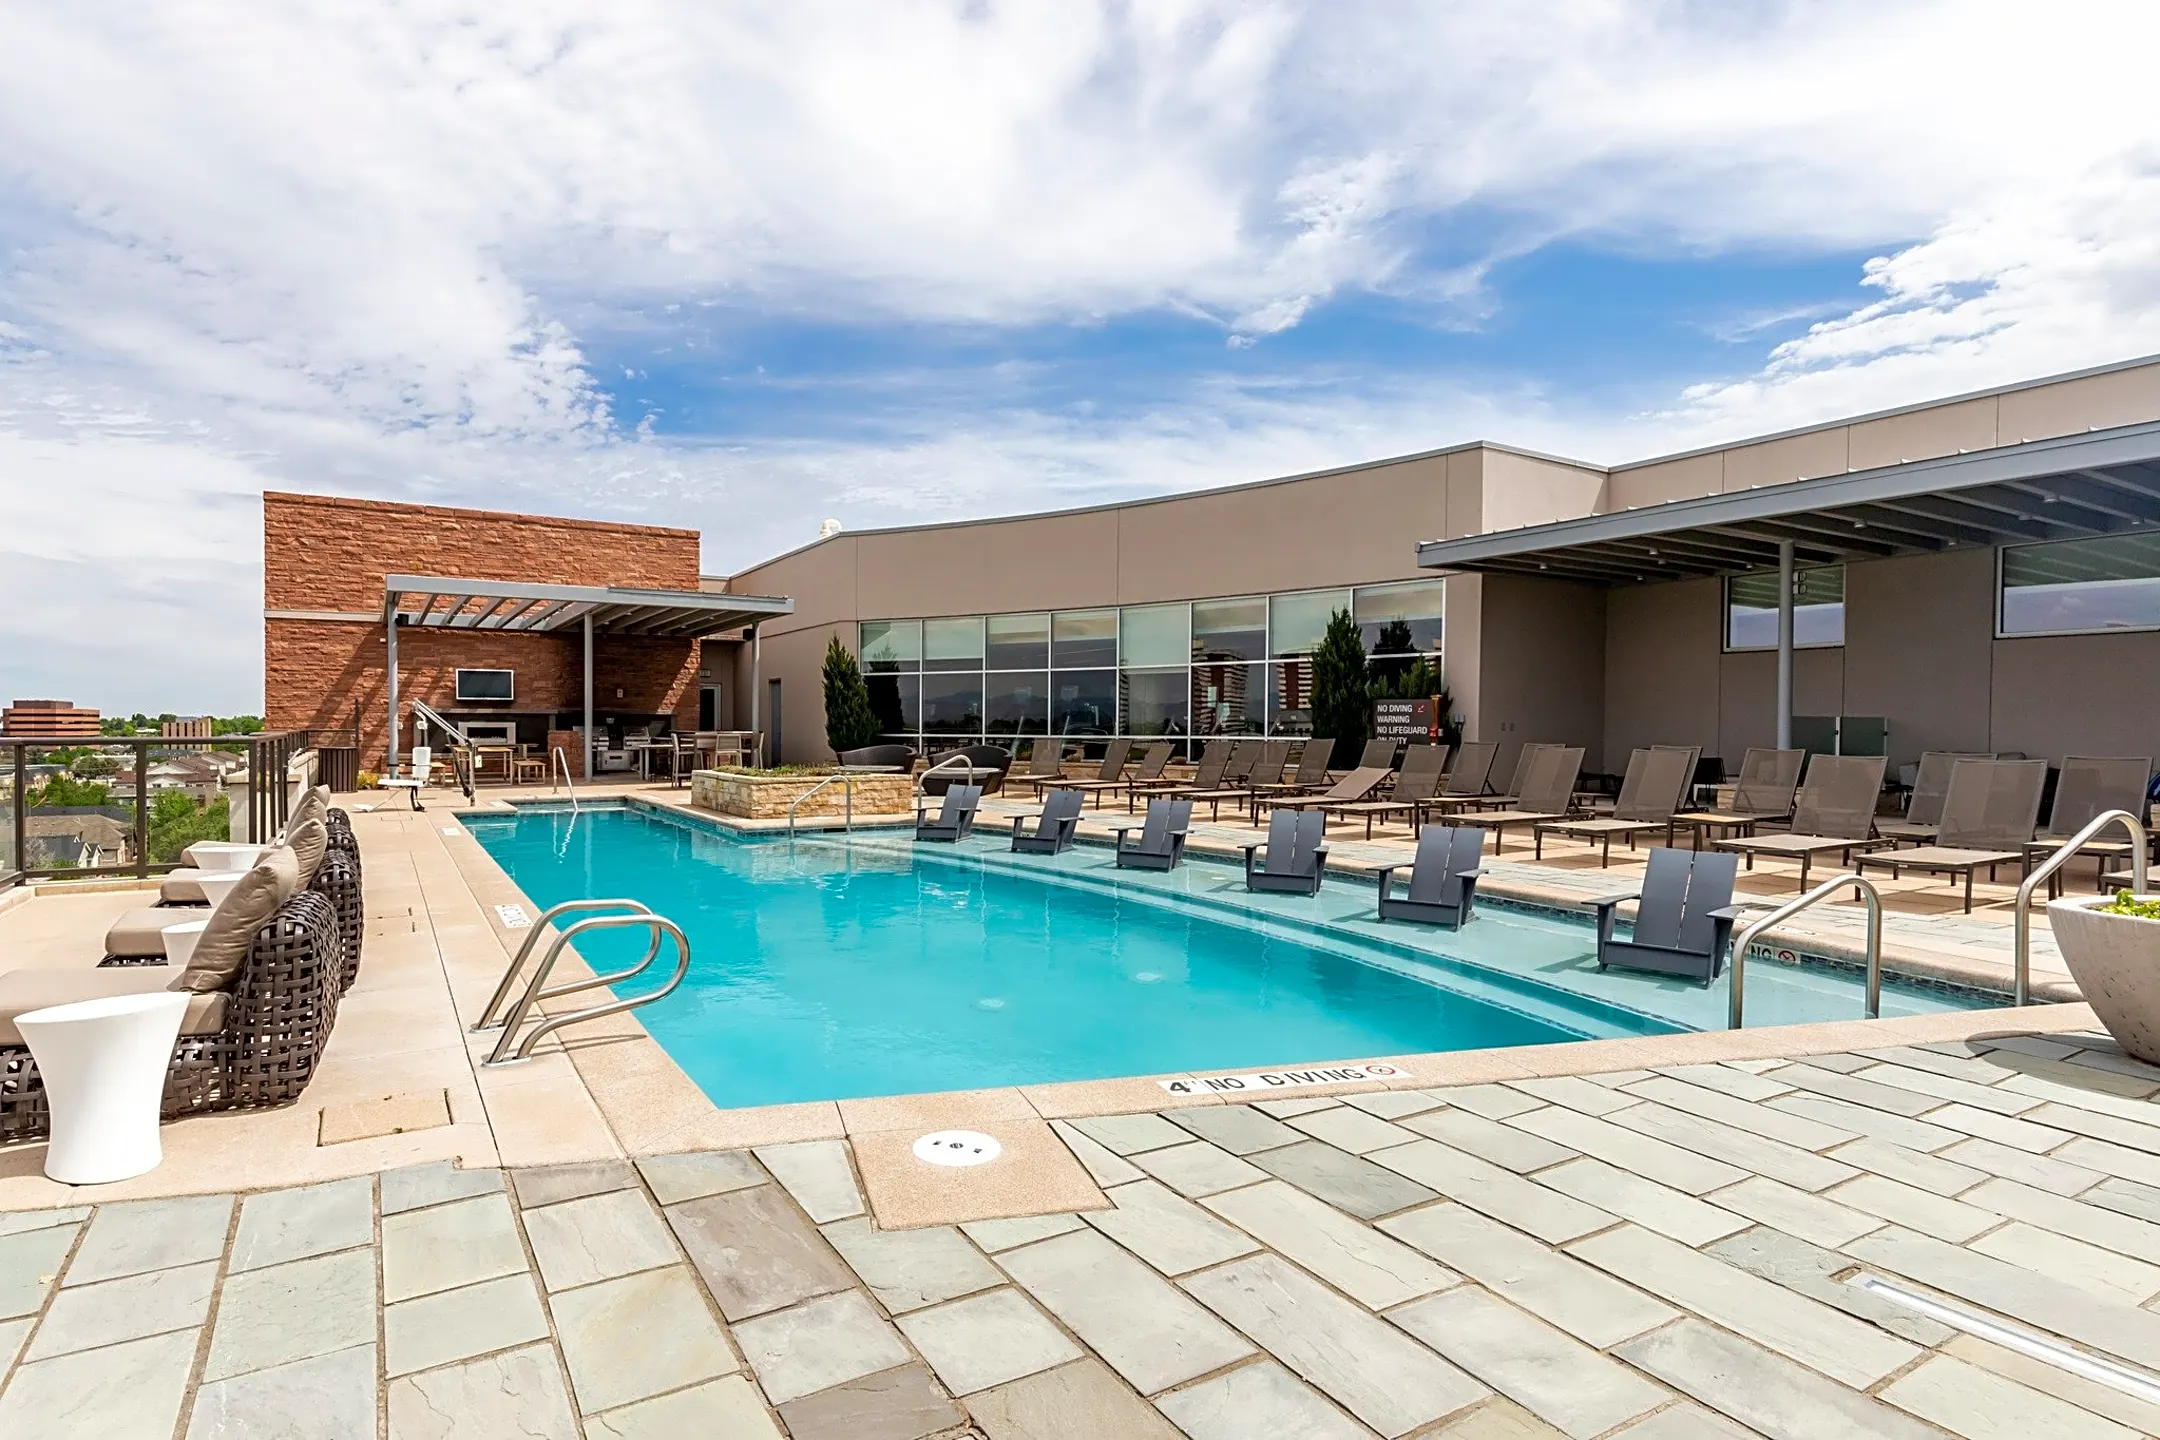 Pool - Gables Cherry Creek Apartments - Denver, CO